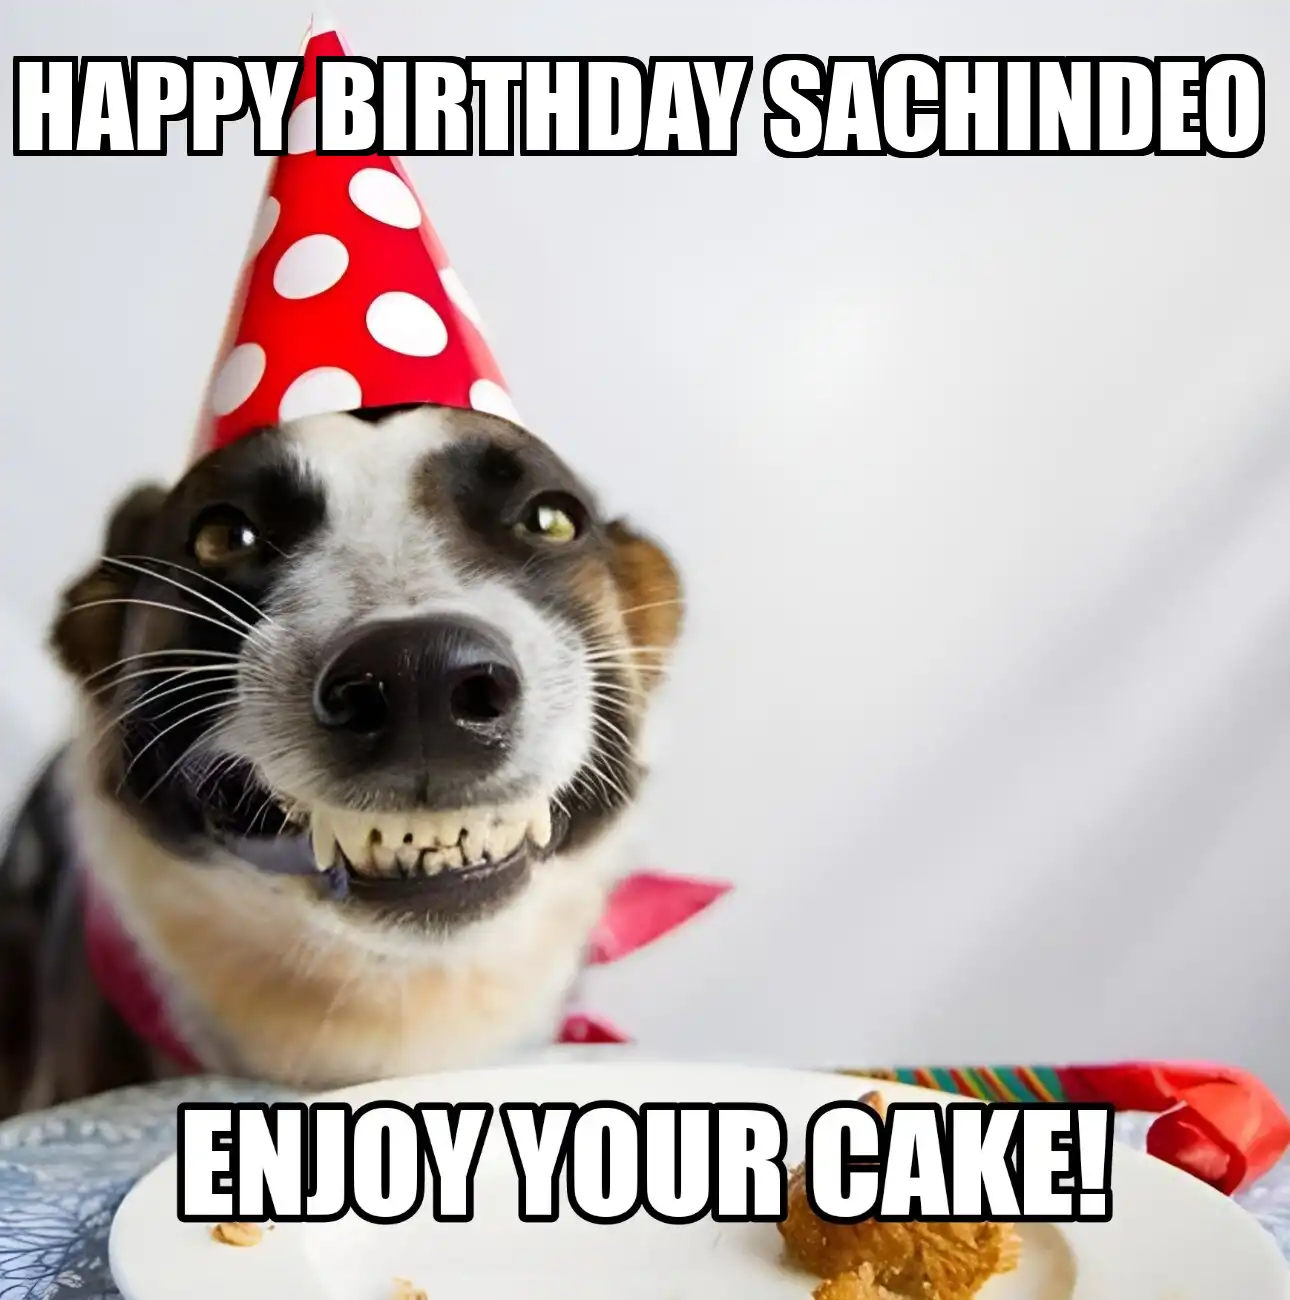 Happy Birthday Sachindeo Enjoy Your Cake Dog Meme